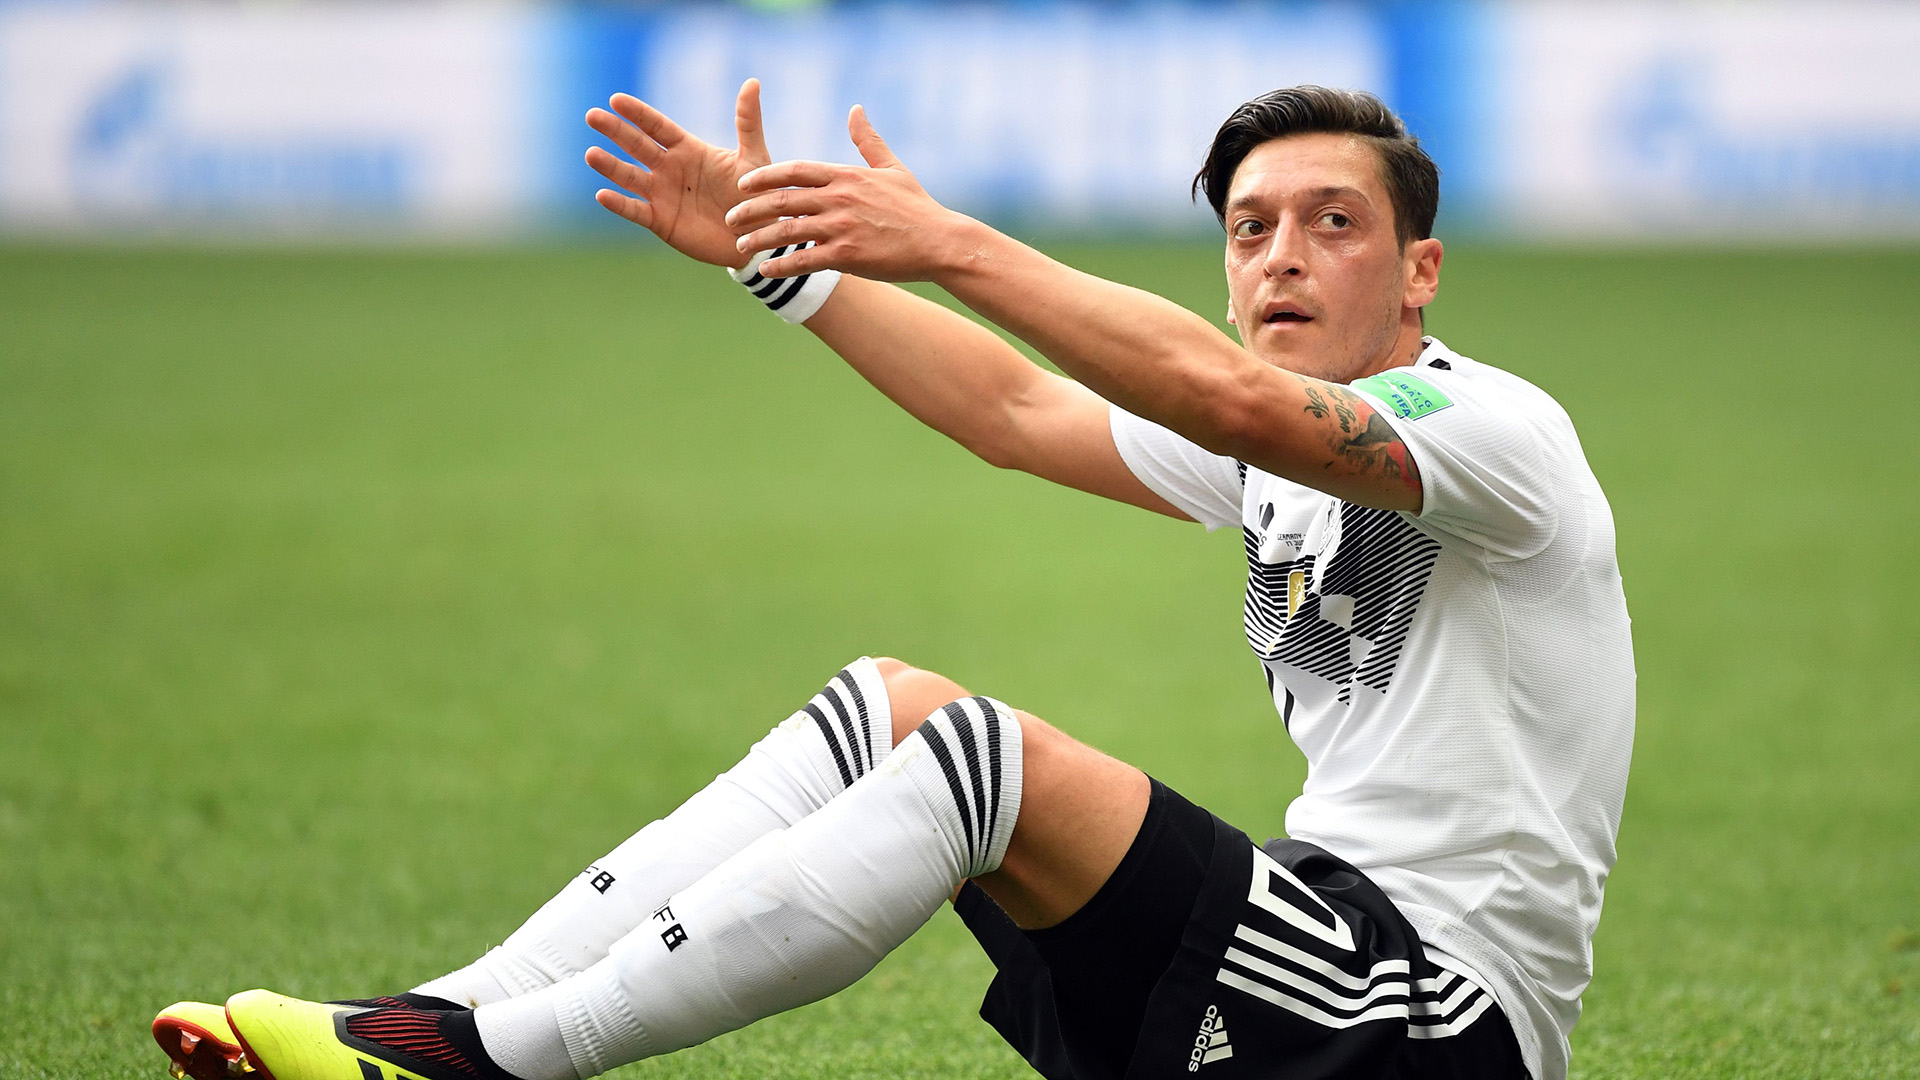 1920x1080 World Cup 2018: Mesut Ozil criticism unfair, says Germany legend Hamann |